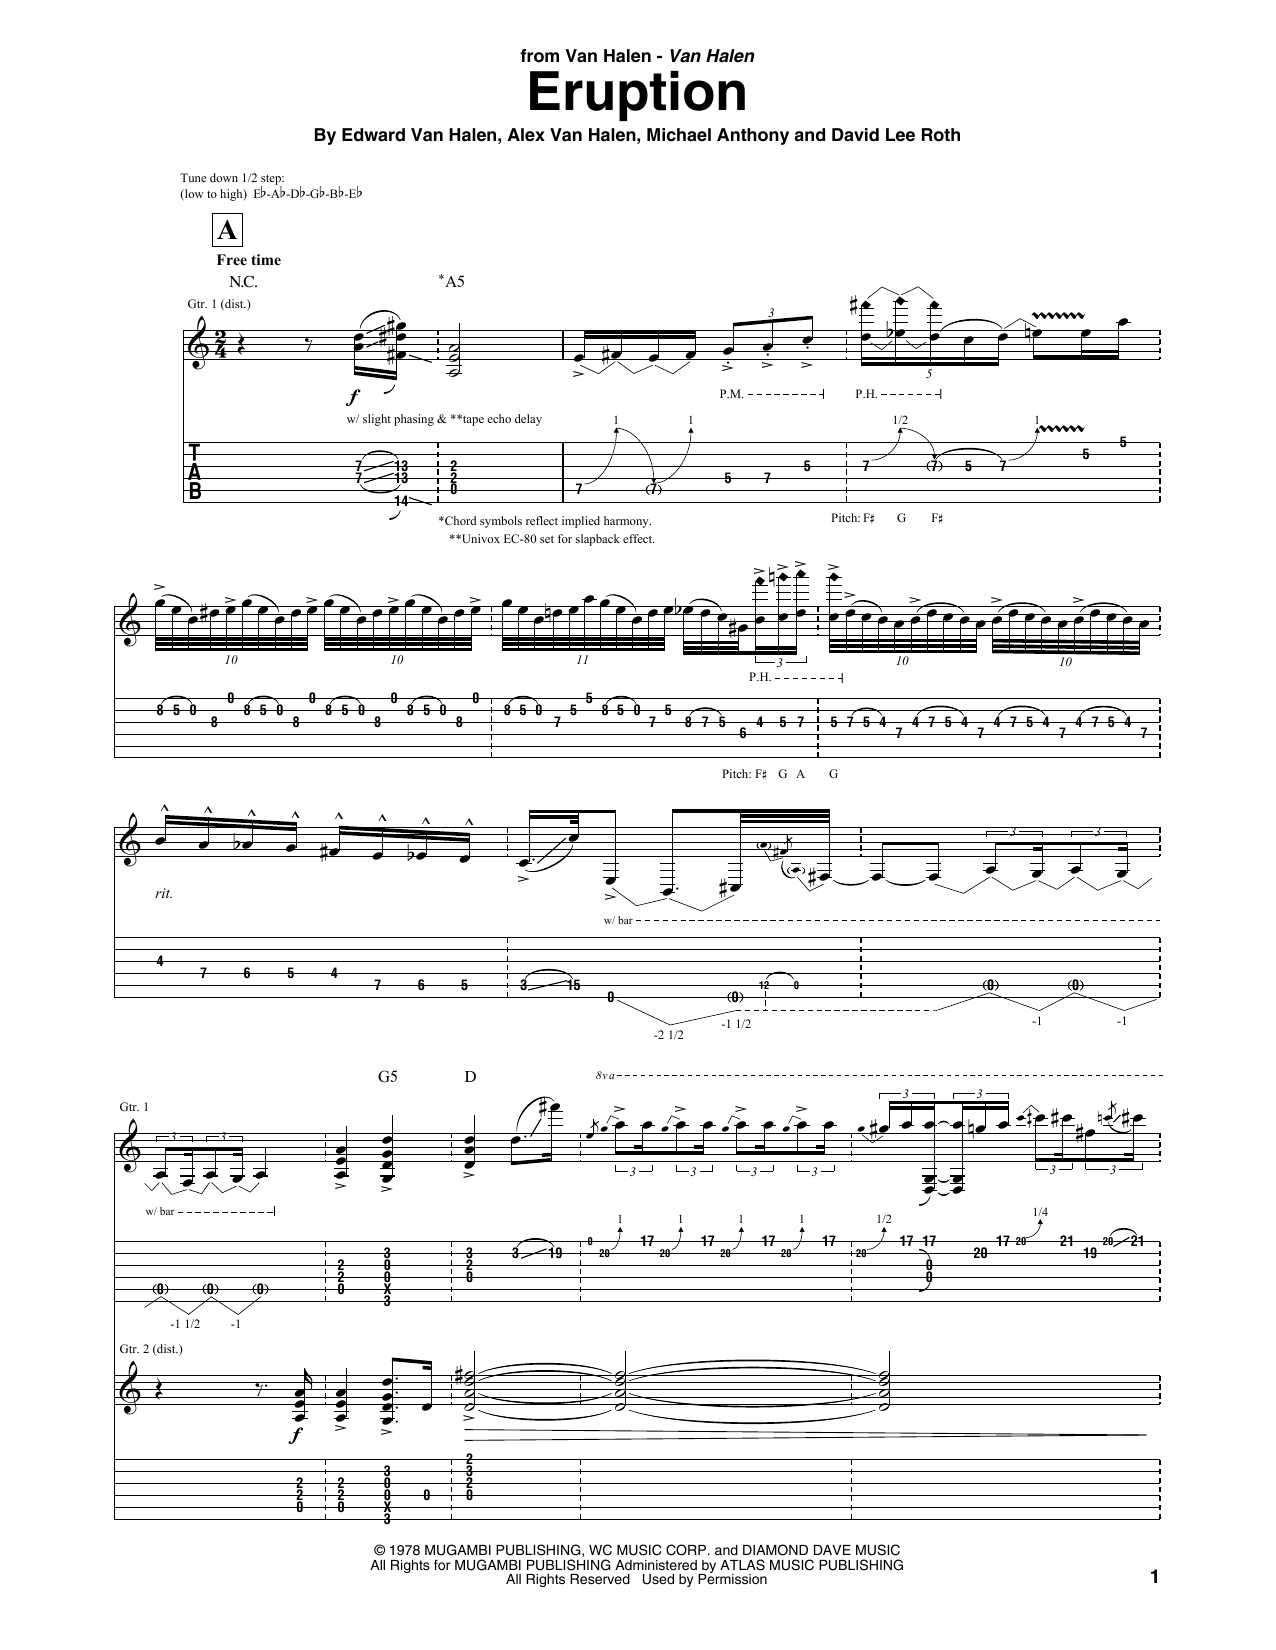 Van Halen Eruption Sheet Music Notes & Chords for Guitar Tab - Download or Print PDF